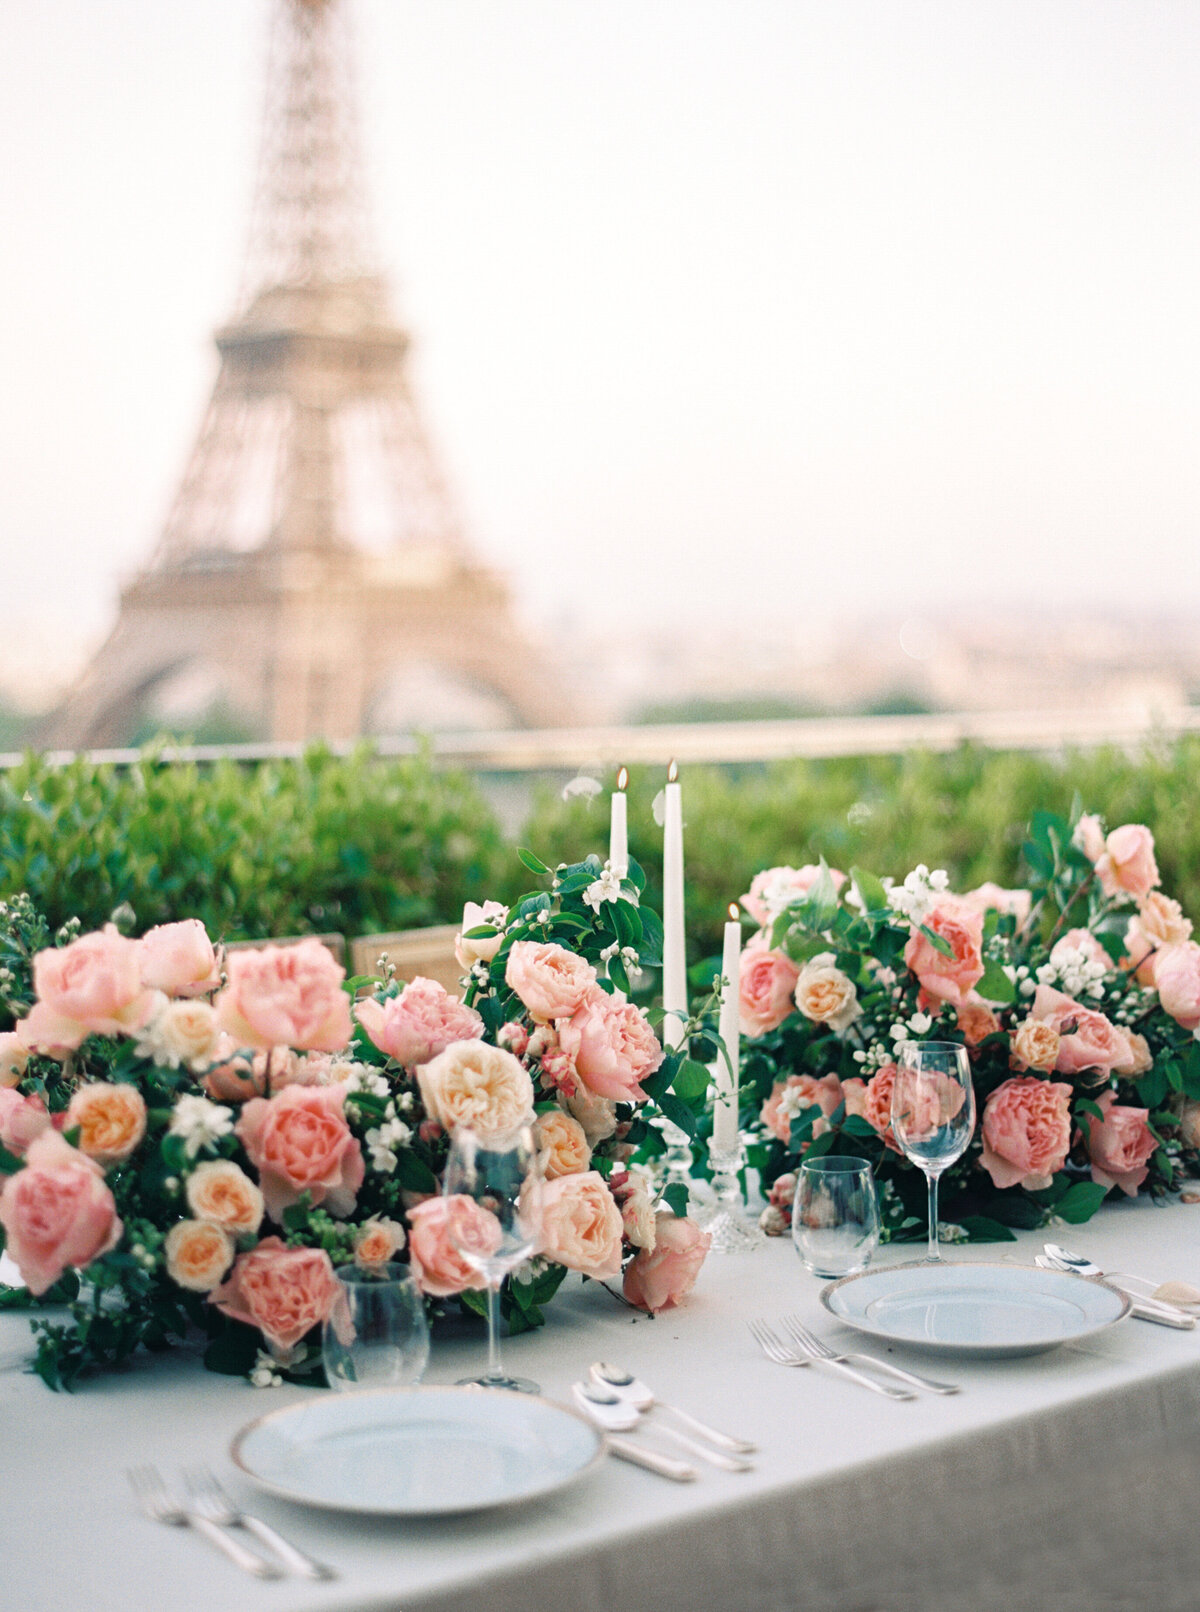 Shangri-La Paris Wedding - Janna Brown Photography